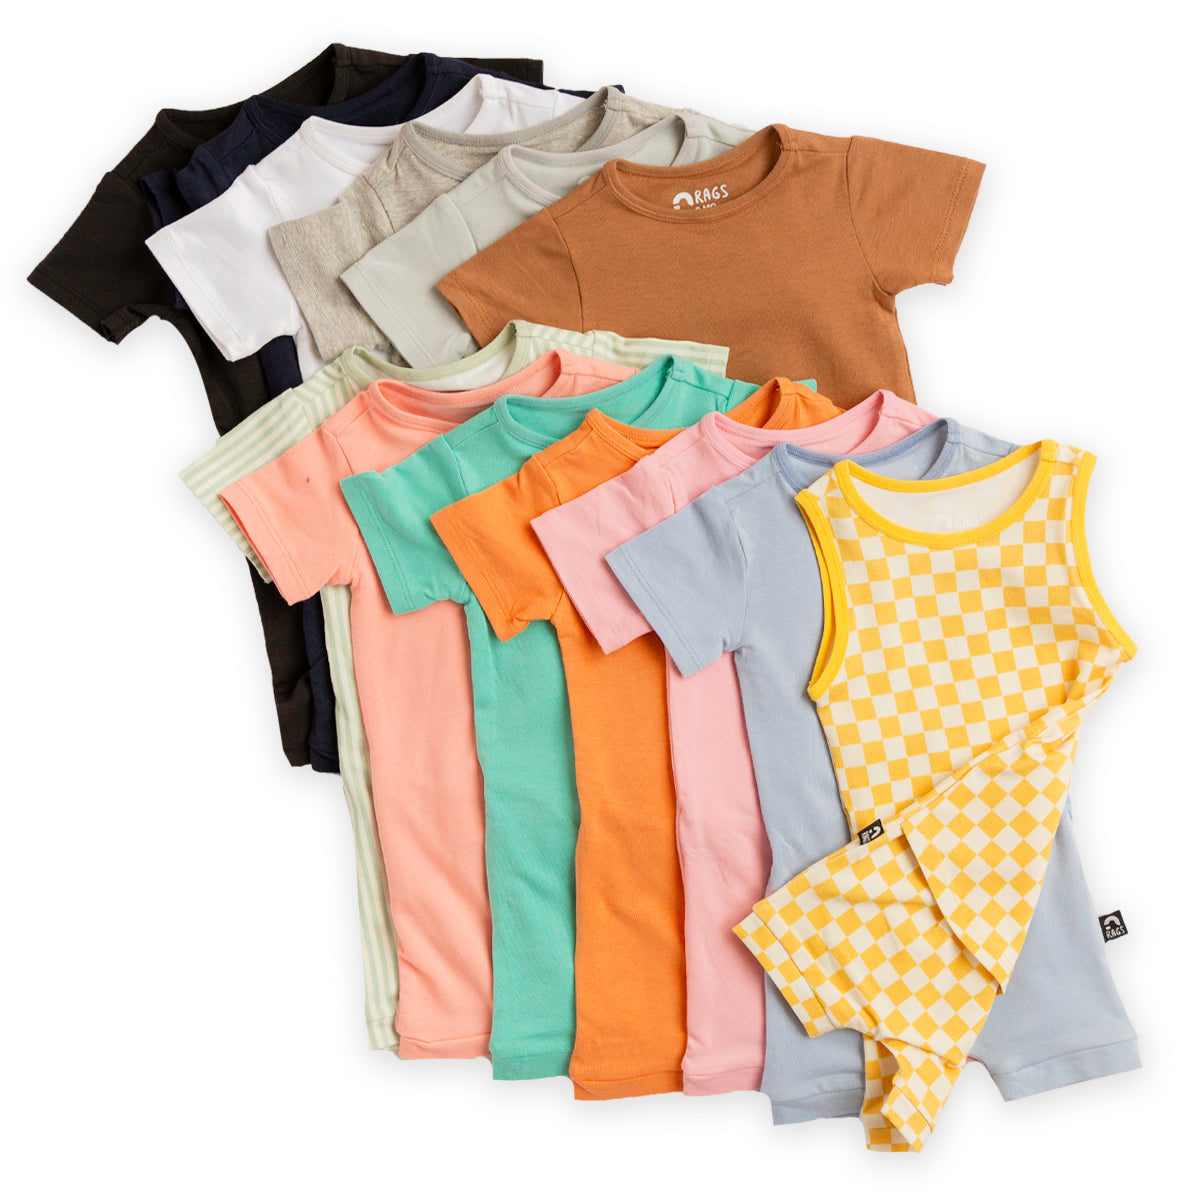 Essentials Infant Peekabooty™ Short Sleeve Short Rag Romper - 'Heather Gray'